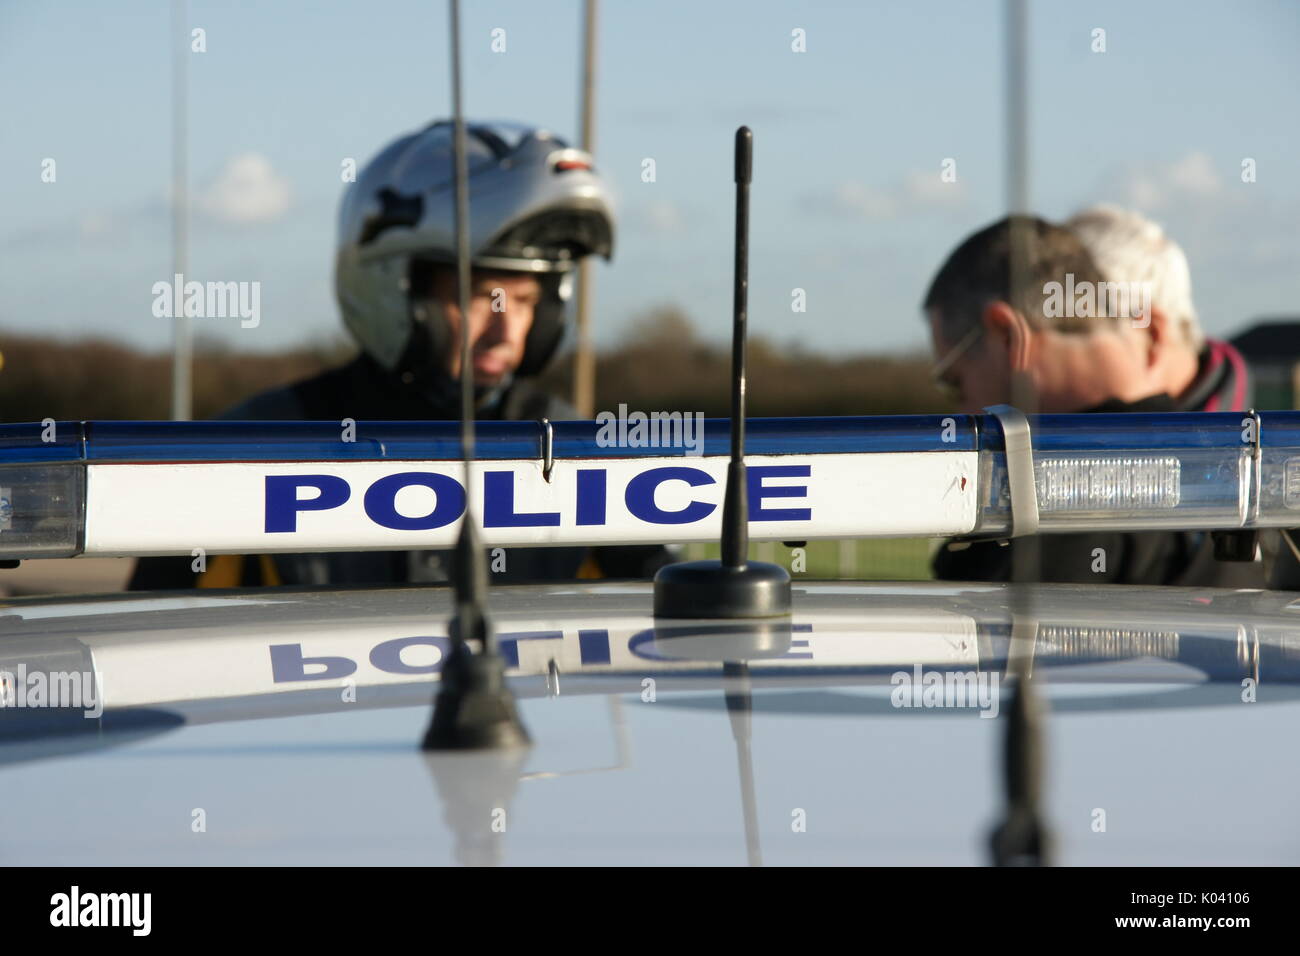 speeding motorcycle, traffic offence Stock Photo